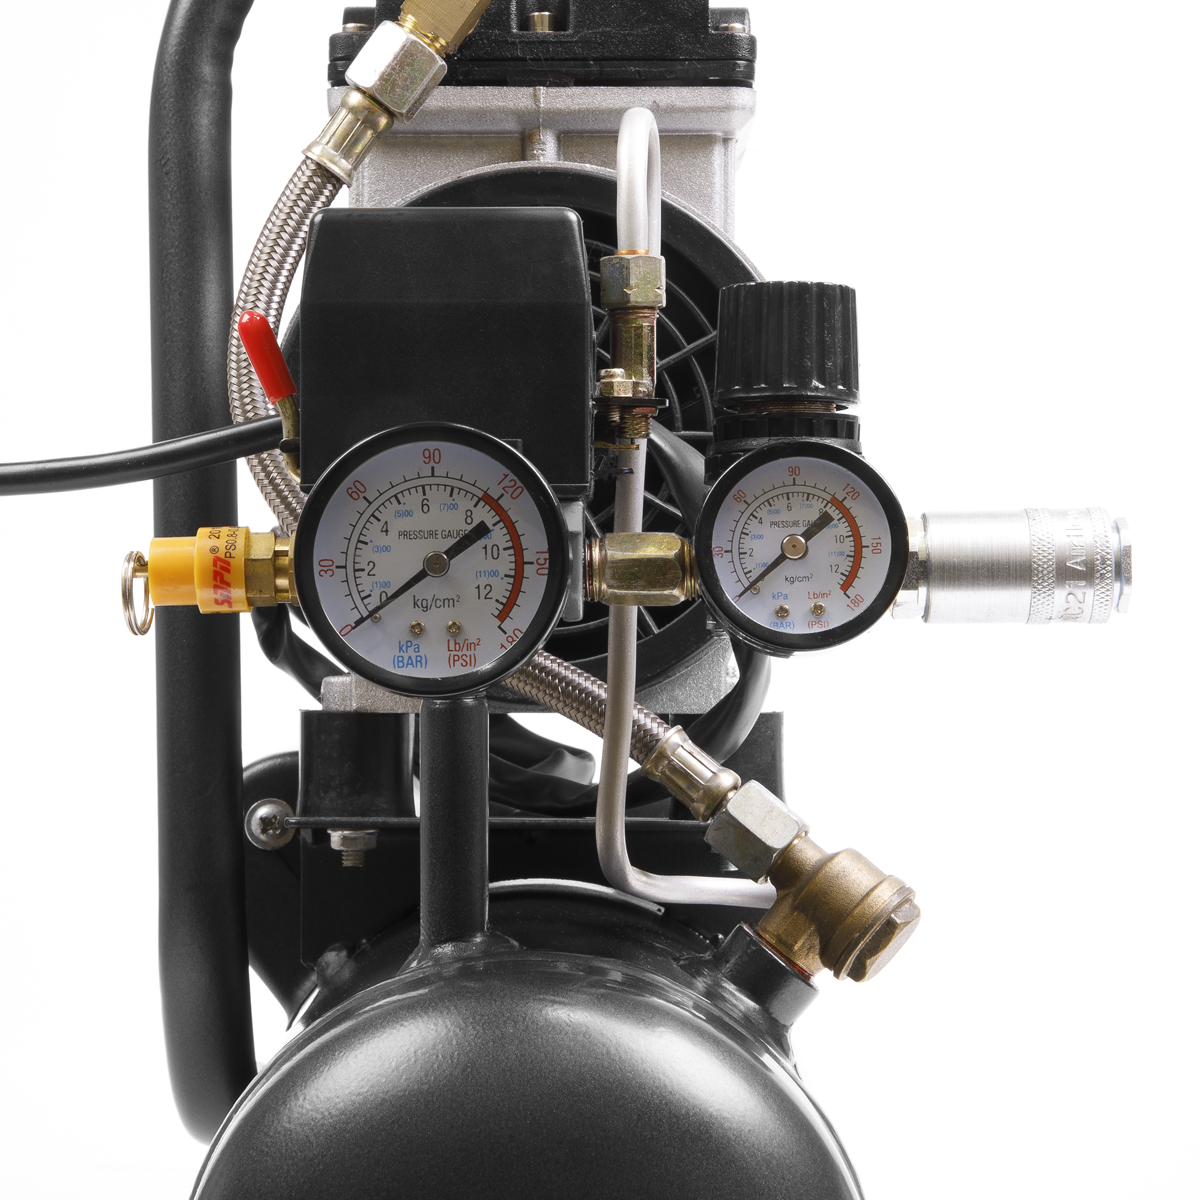 116psi pressure air compressor